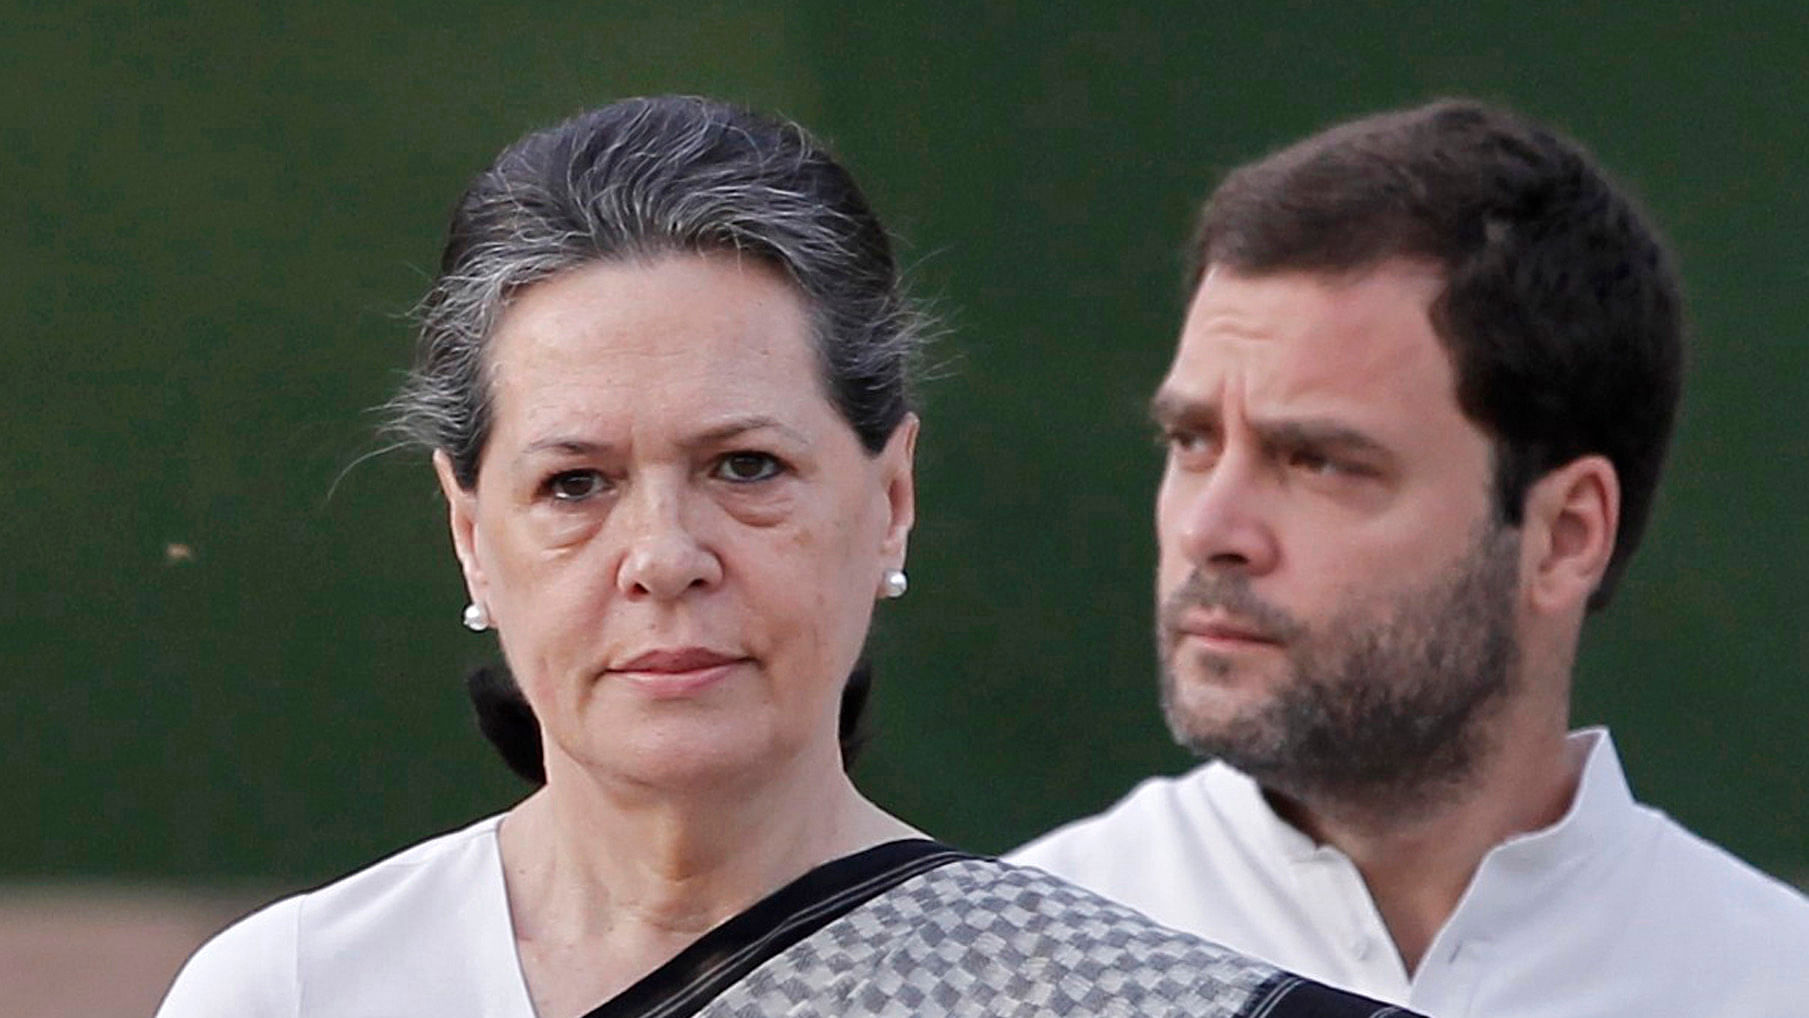 Sonia and Rahul Gandhi.